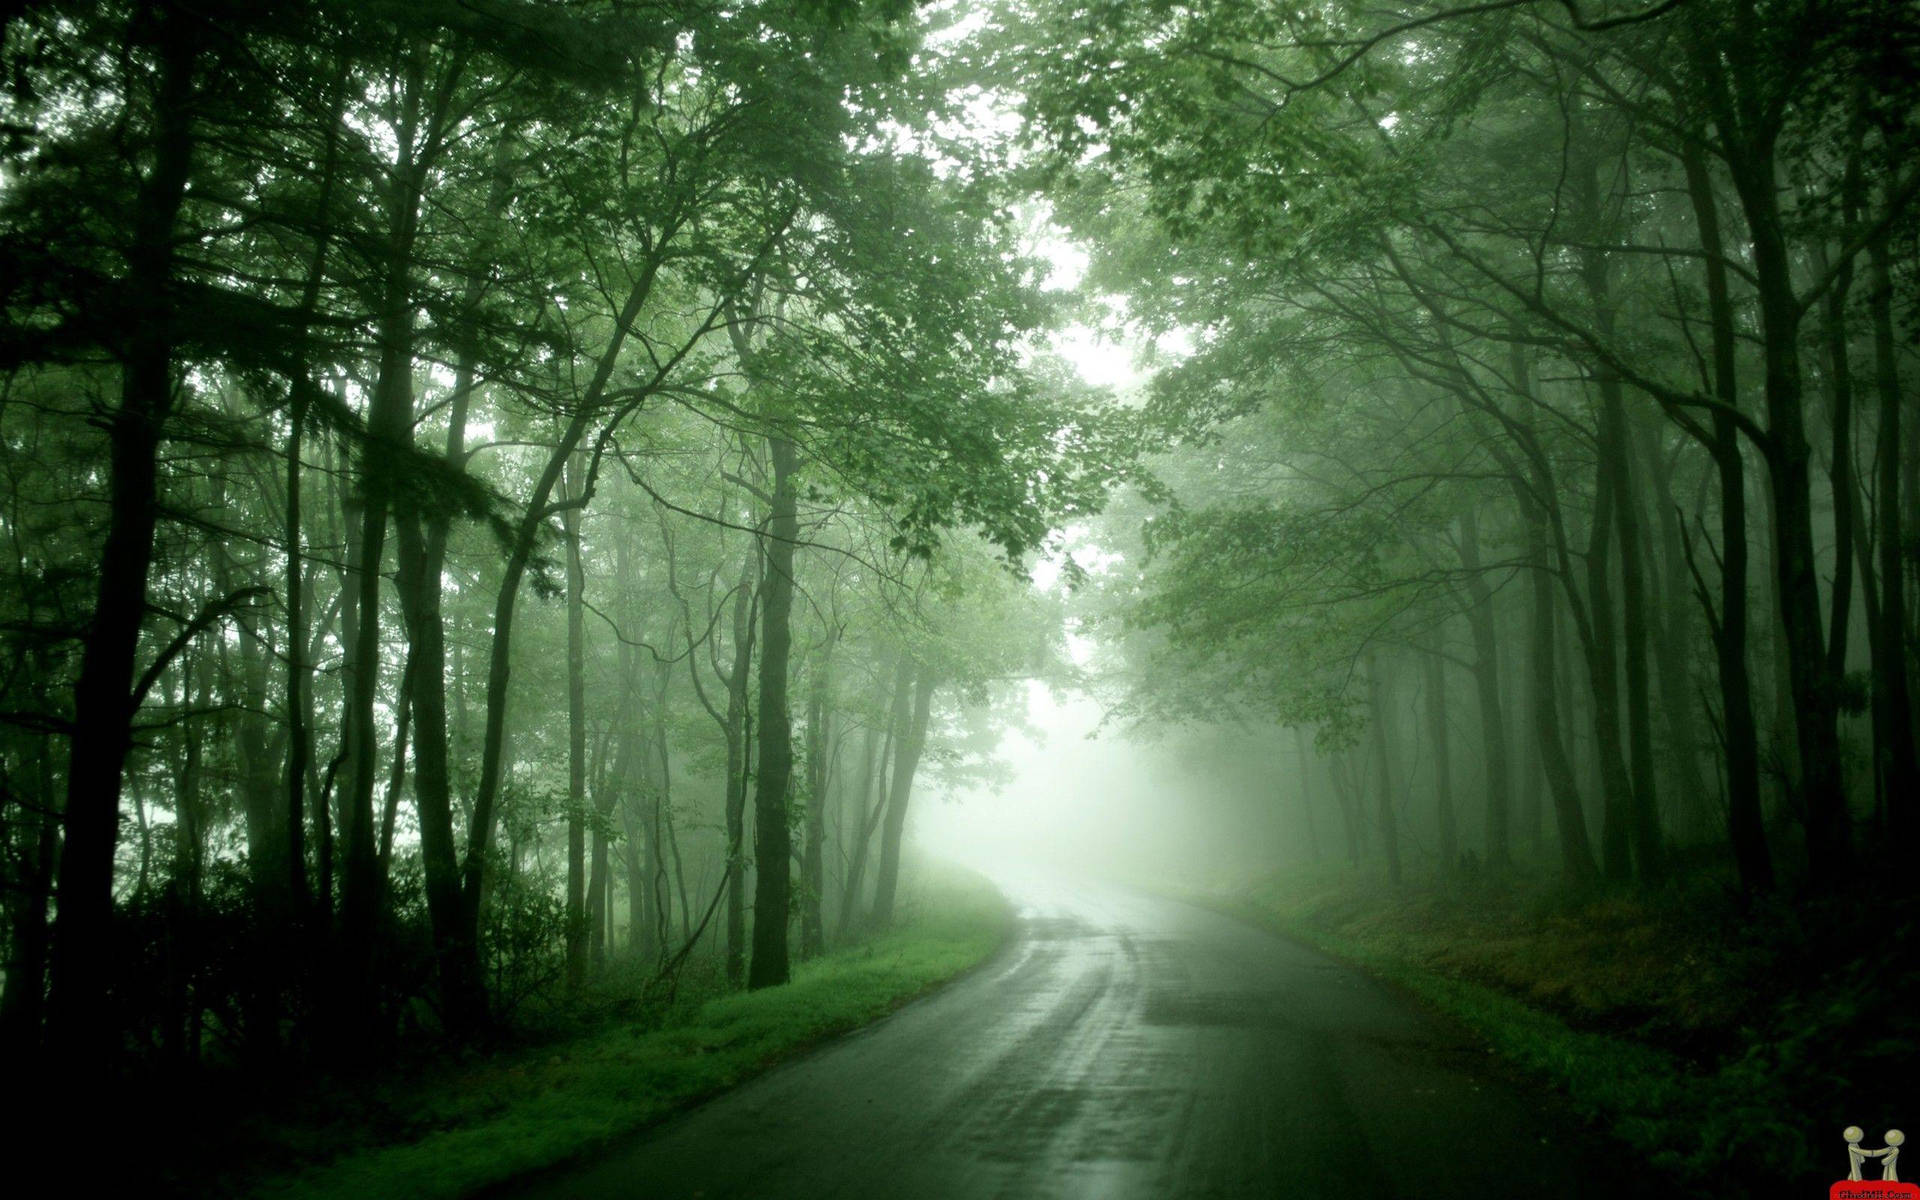 Foggy Road In The Greenery